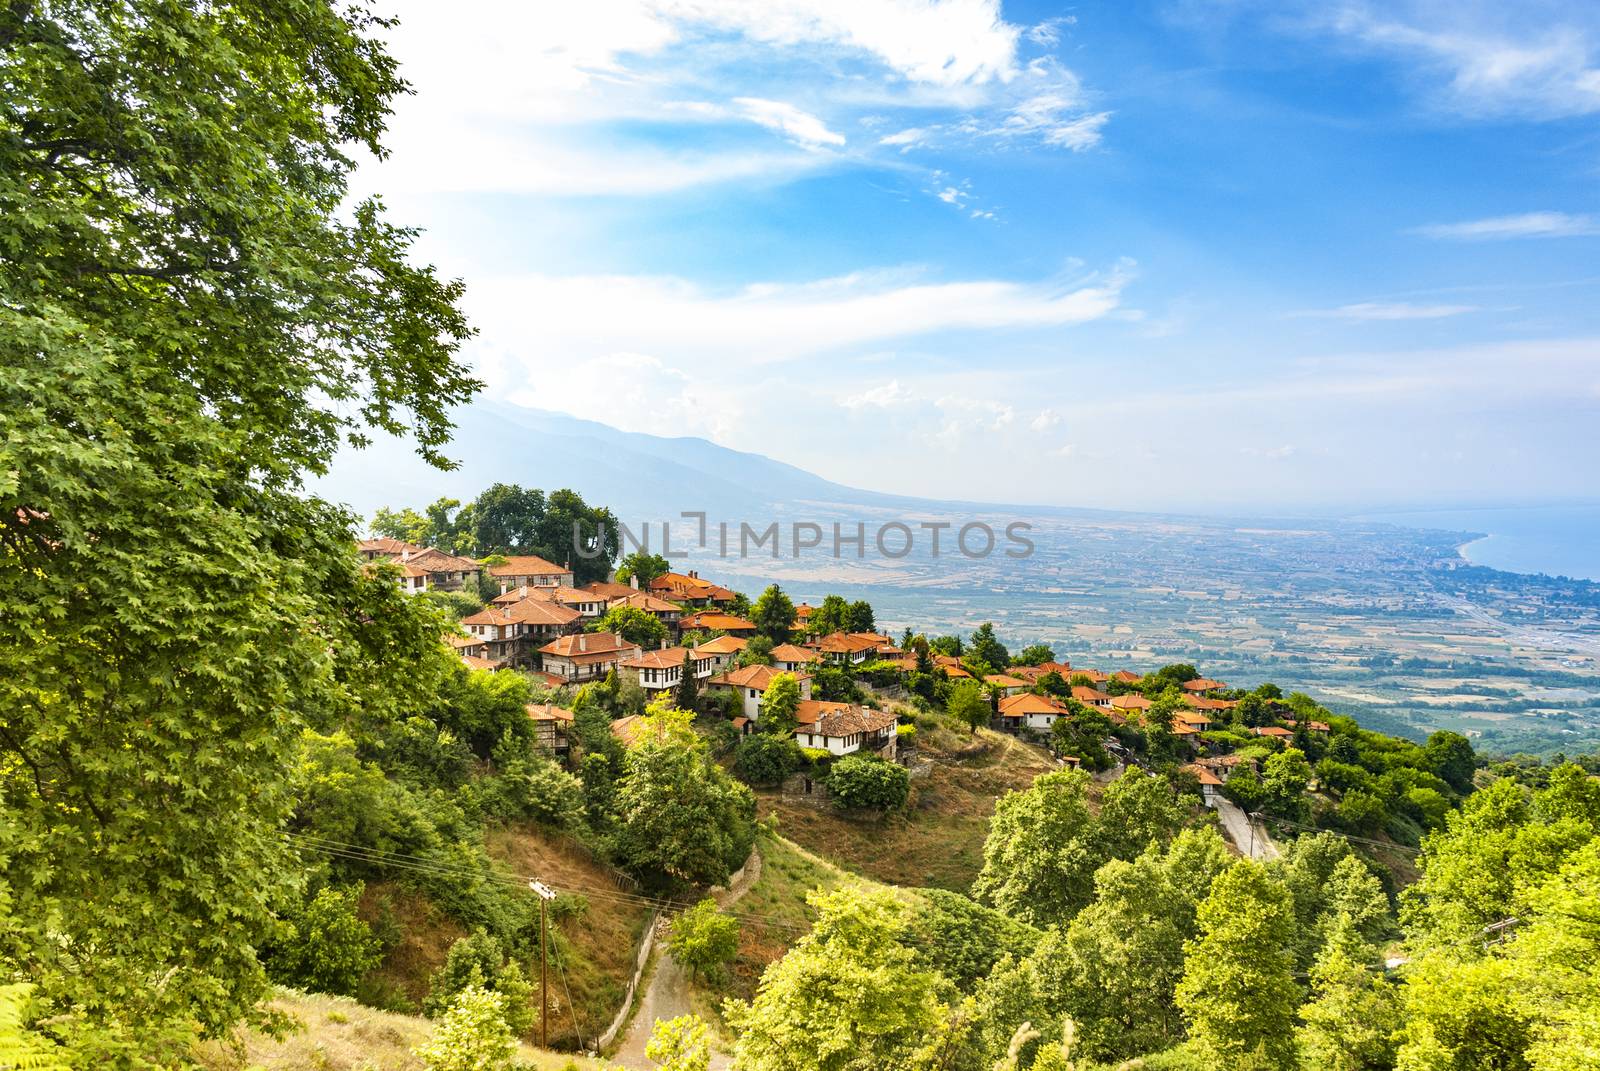 Old Platamonas village, tourist destination in the Olympus Mountain region of Greece.